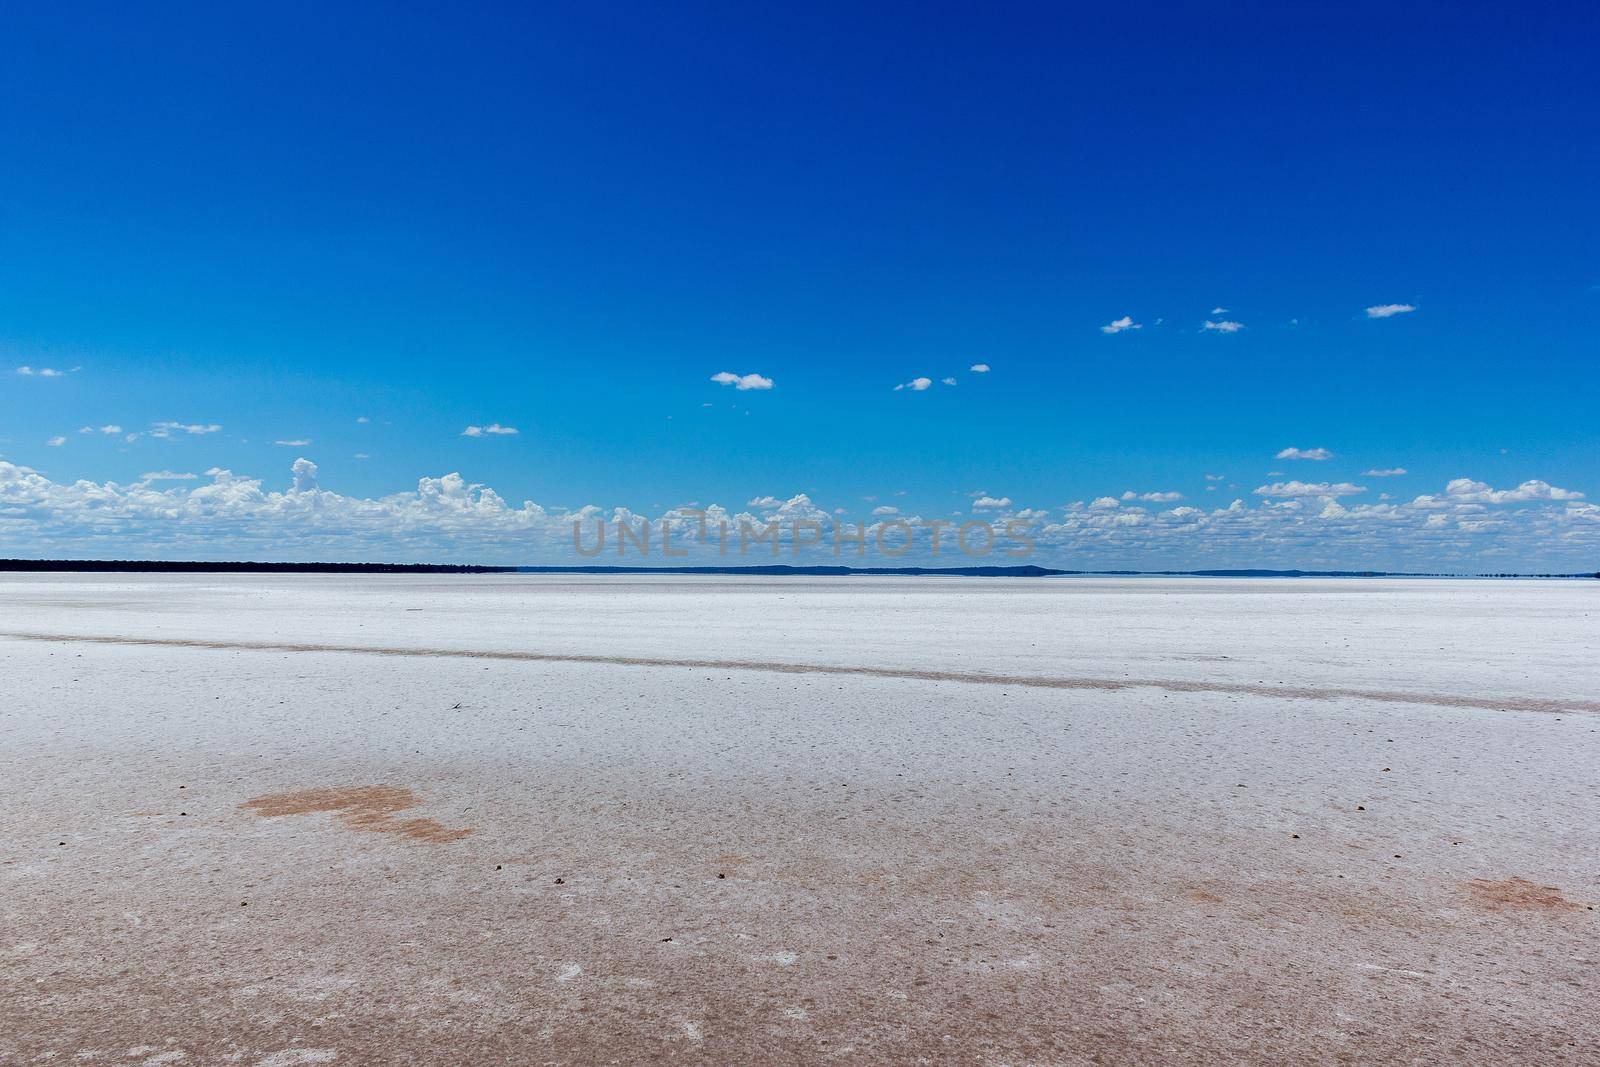 Salt lake in Western Australia with some clouds, Australia.